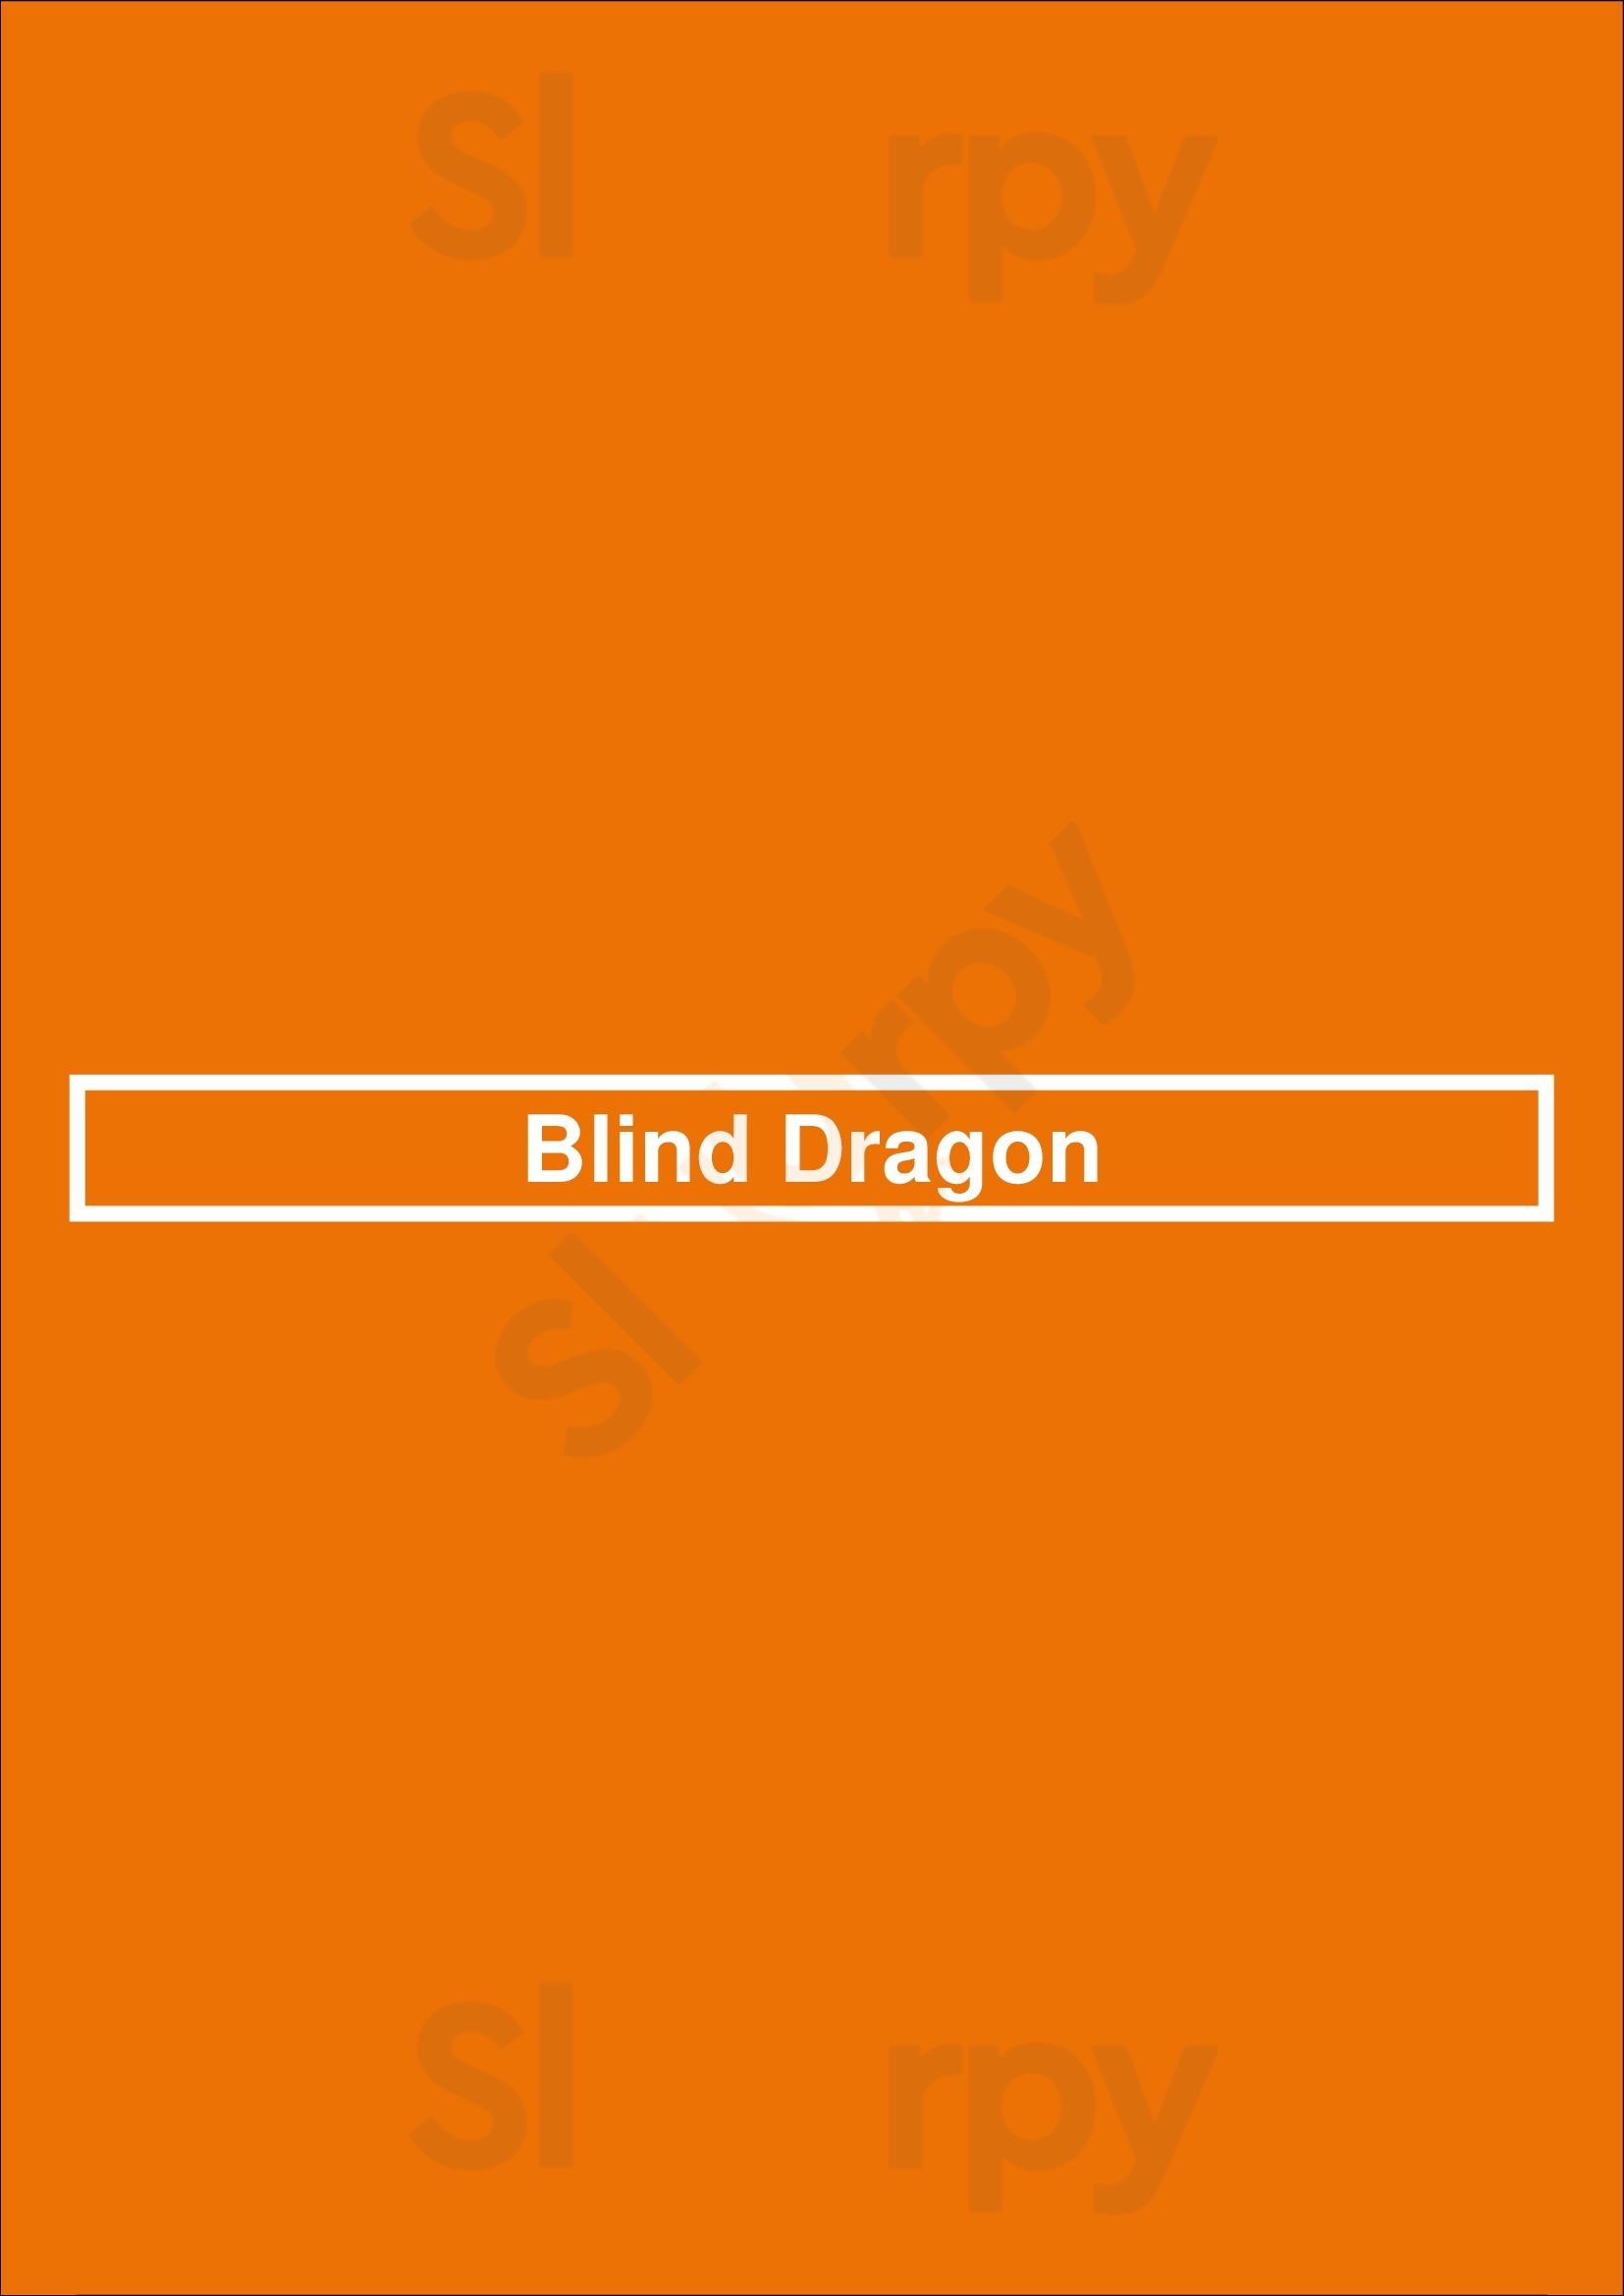 Blind Dragon Chicago Menu - 1